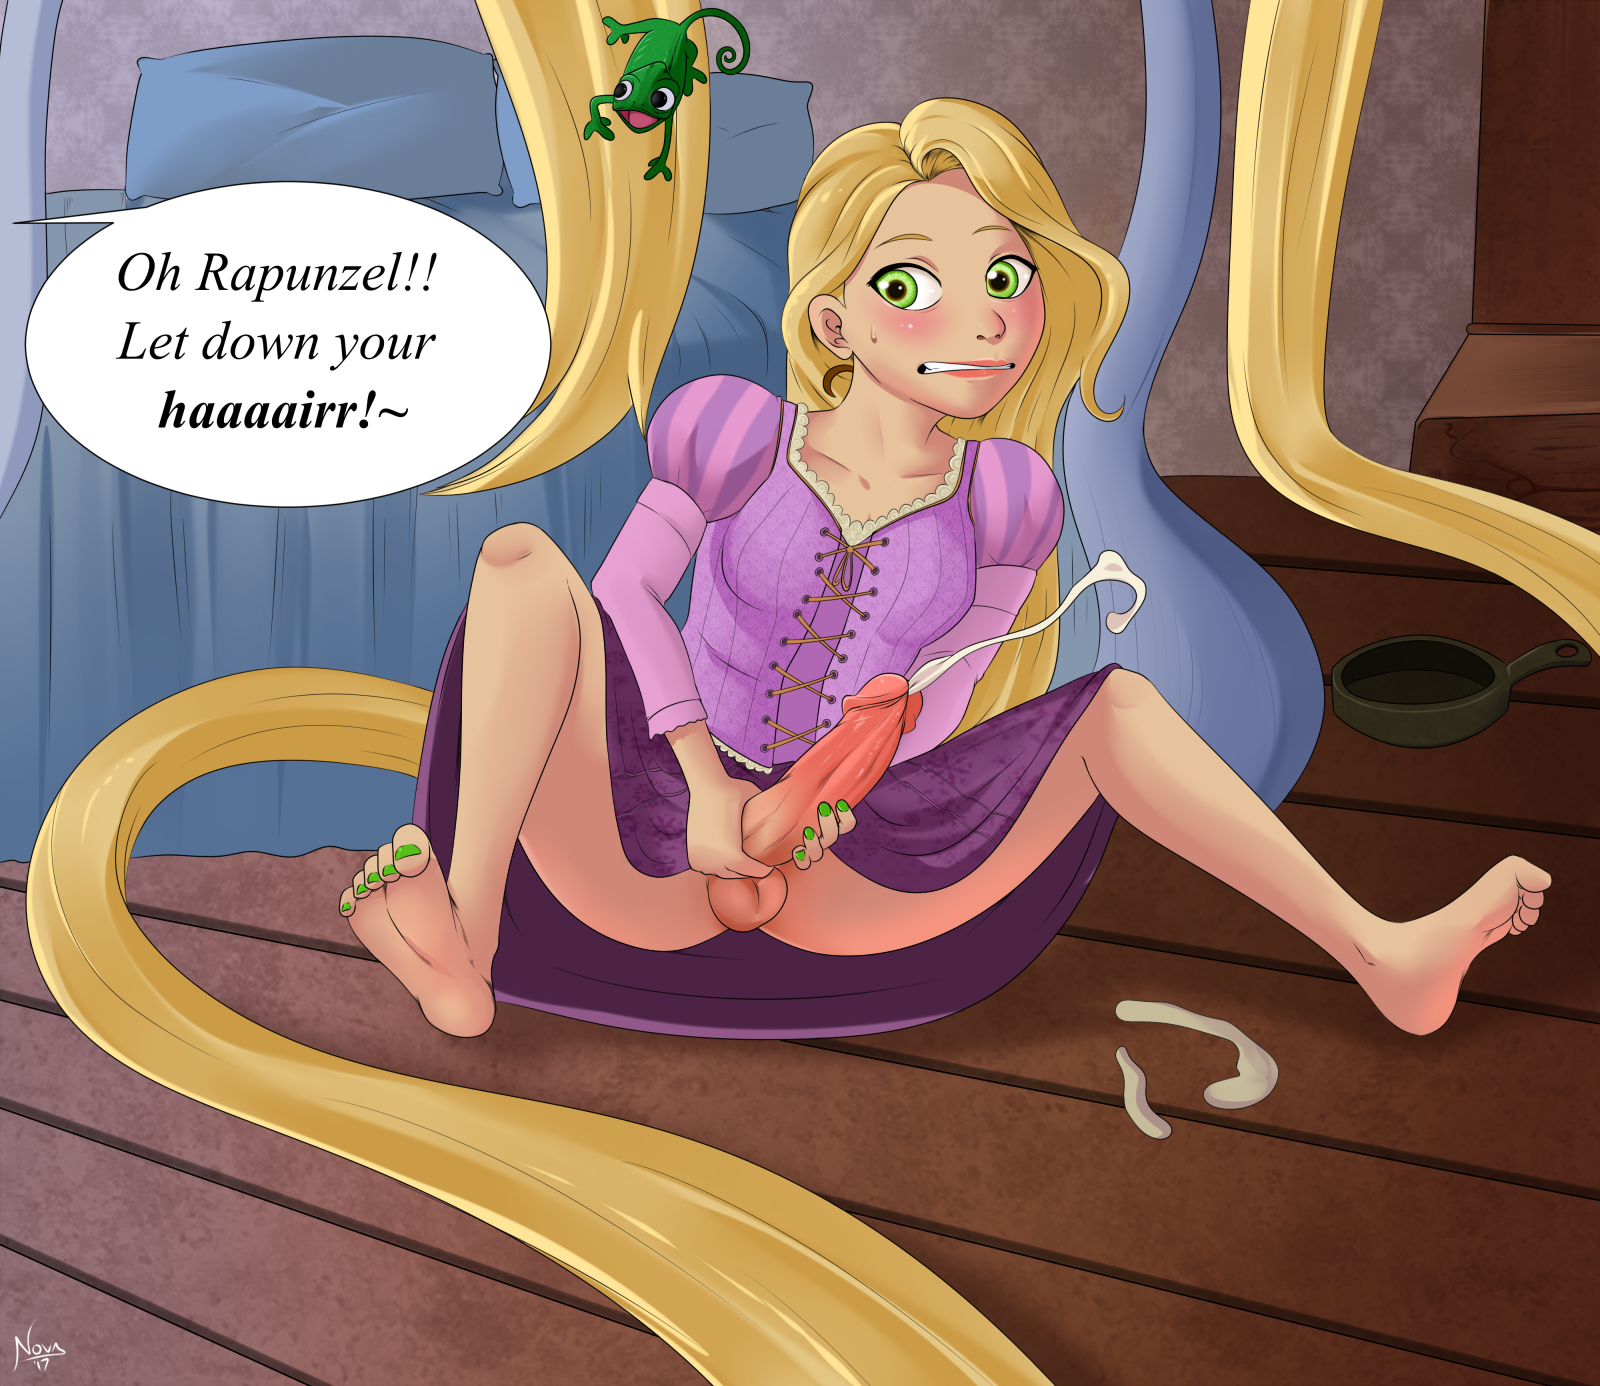 Rapunzel sarja kuva porno